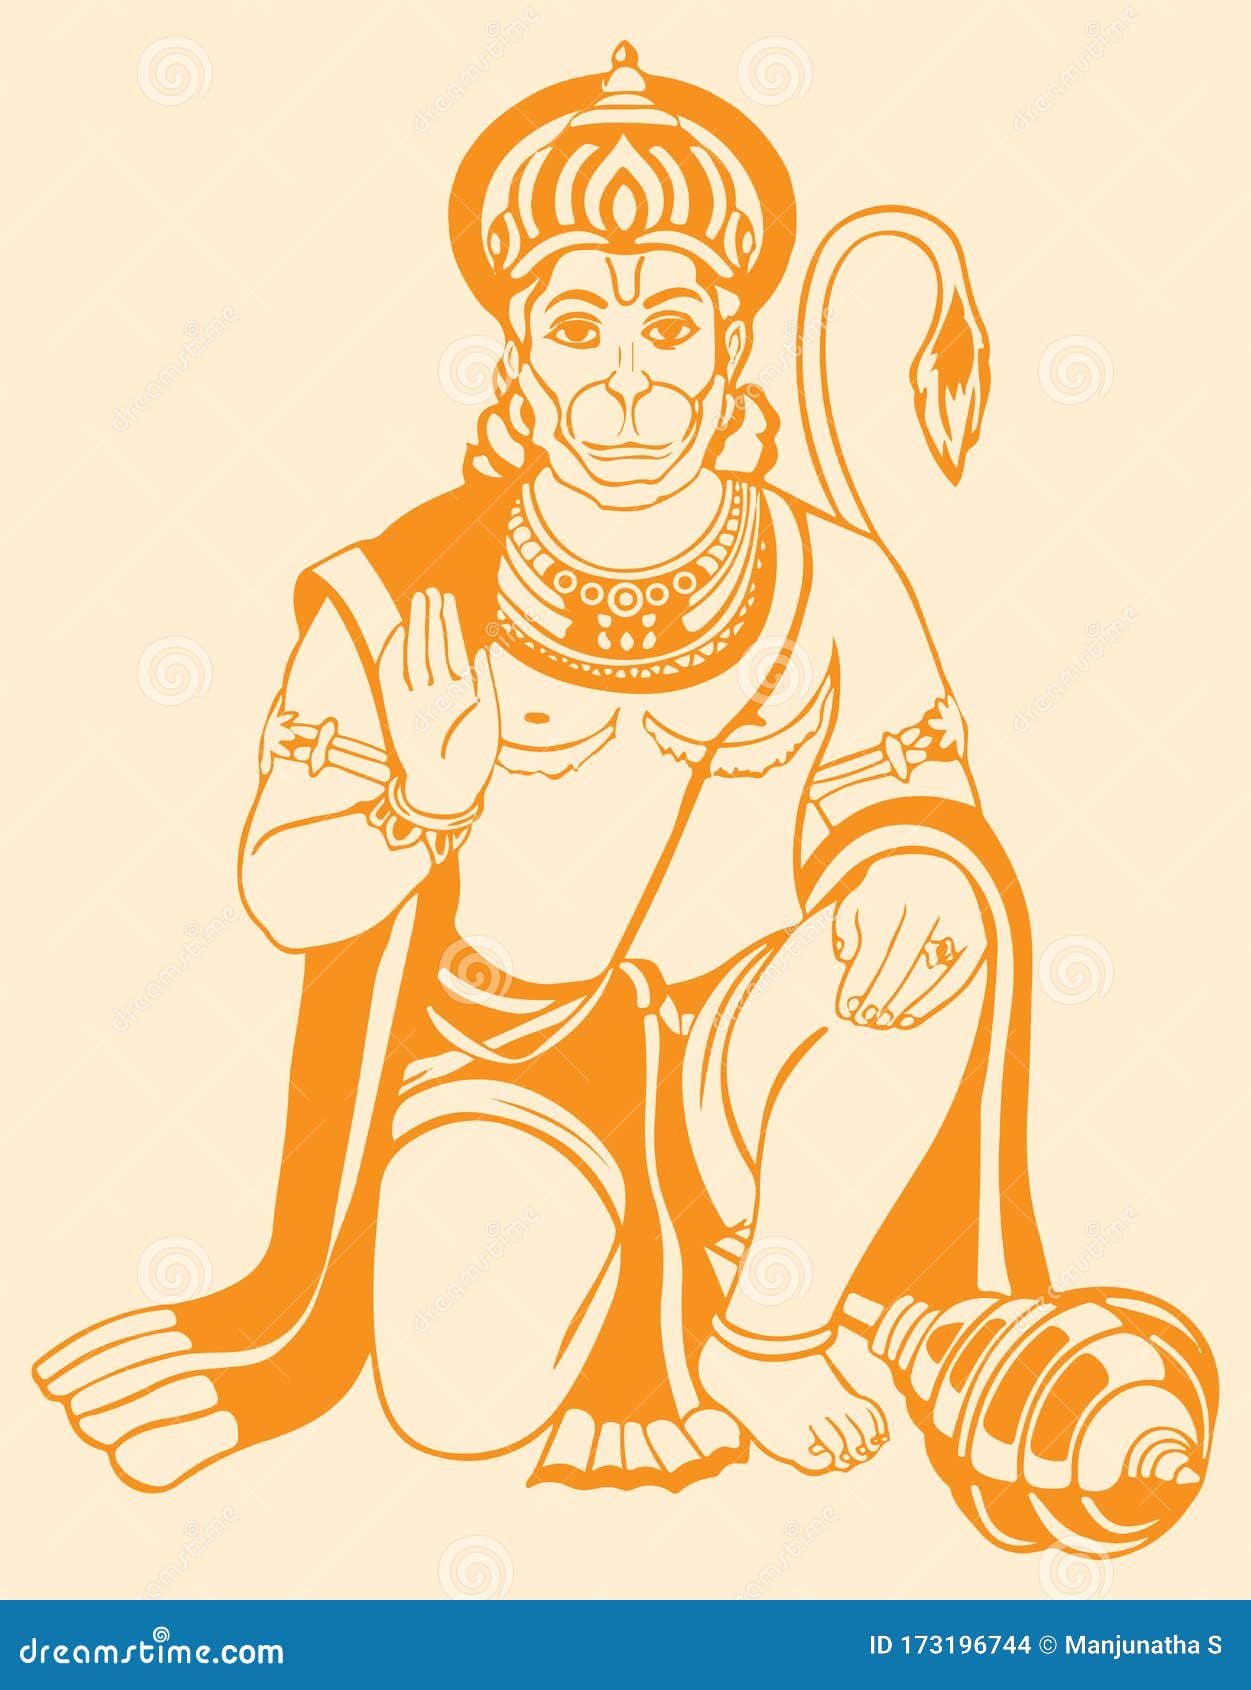 White And Black A4 Size Paper Lord Hanuman Pencil Sketch